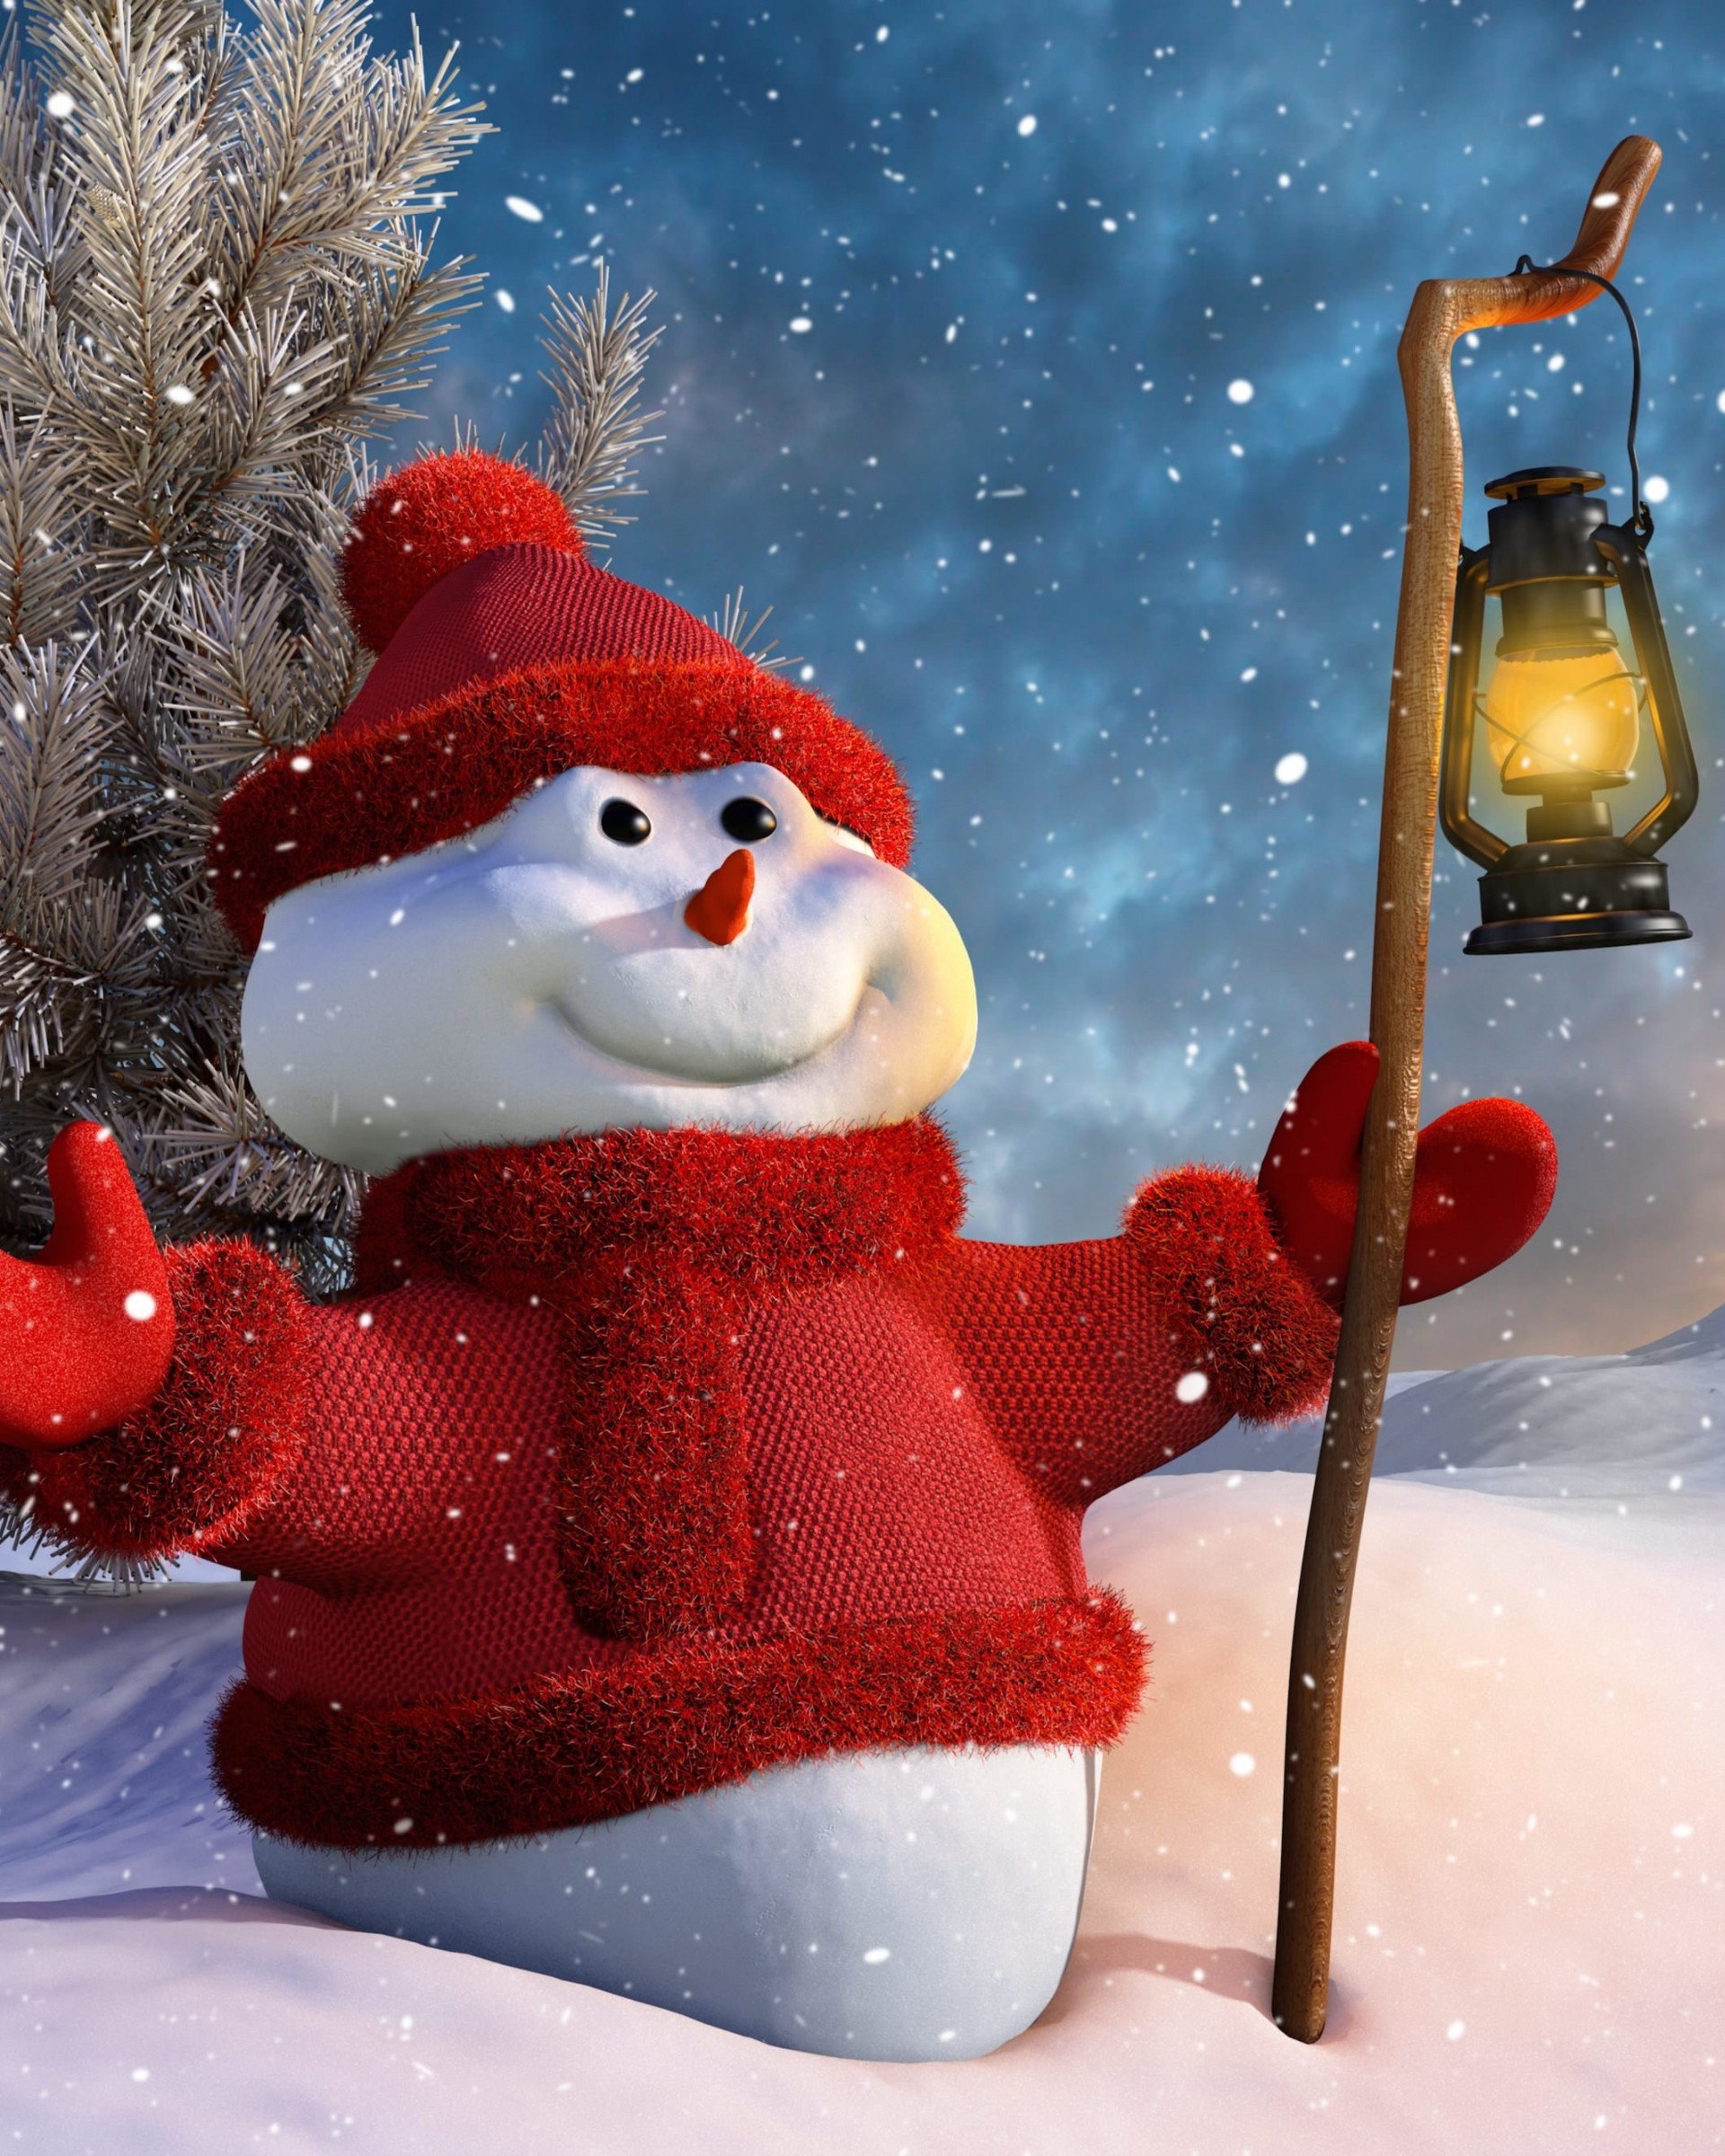 Christmas Snowman Wallpaper for Google Nexus 7